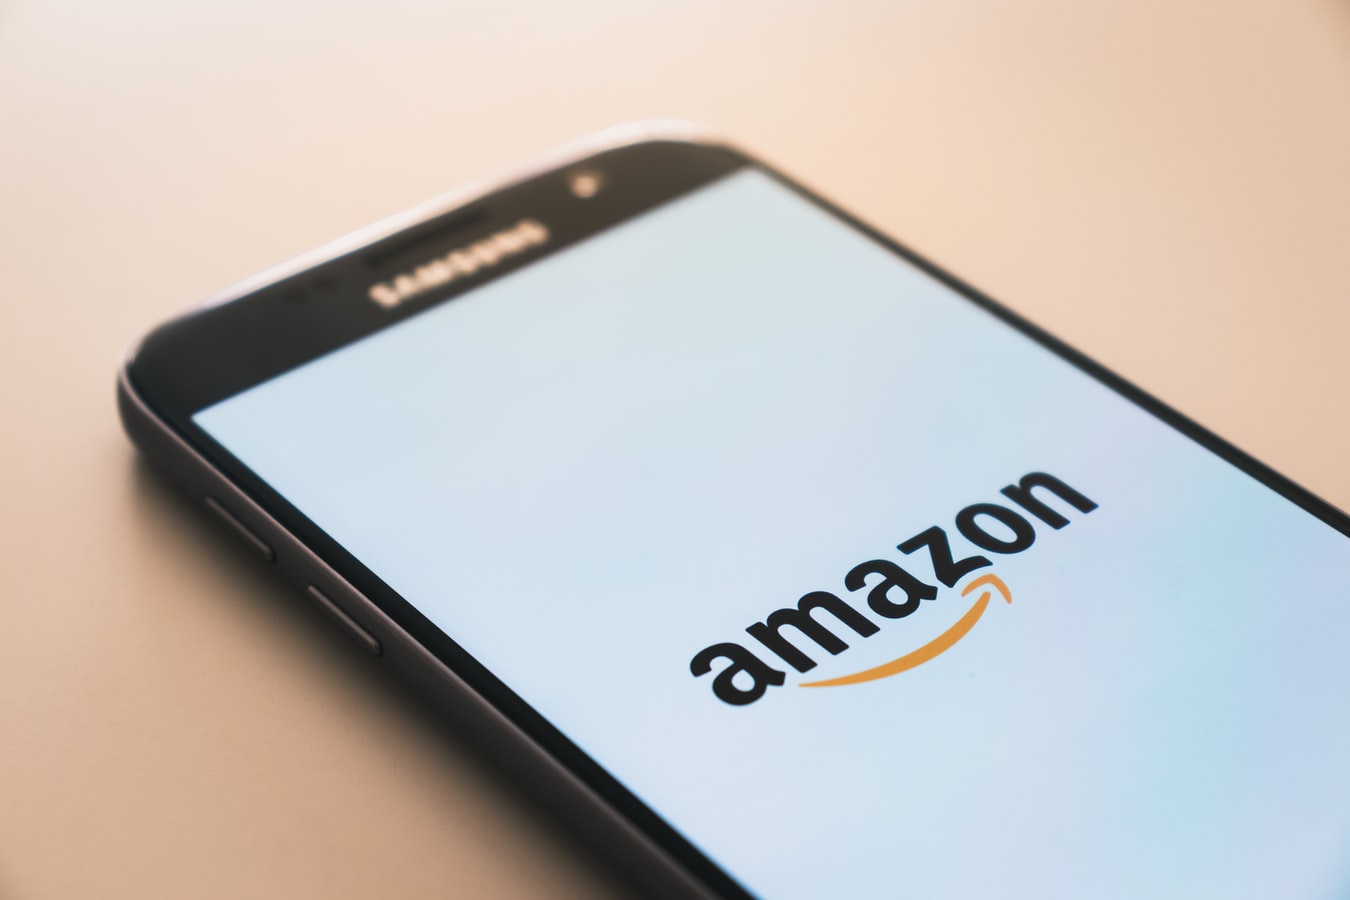 Amazon bans TikTok on employee phones, then calls it a mistake